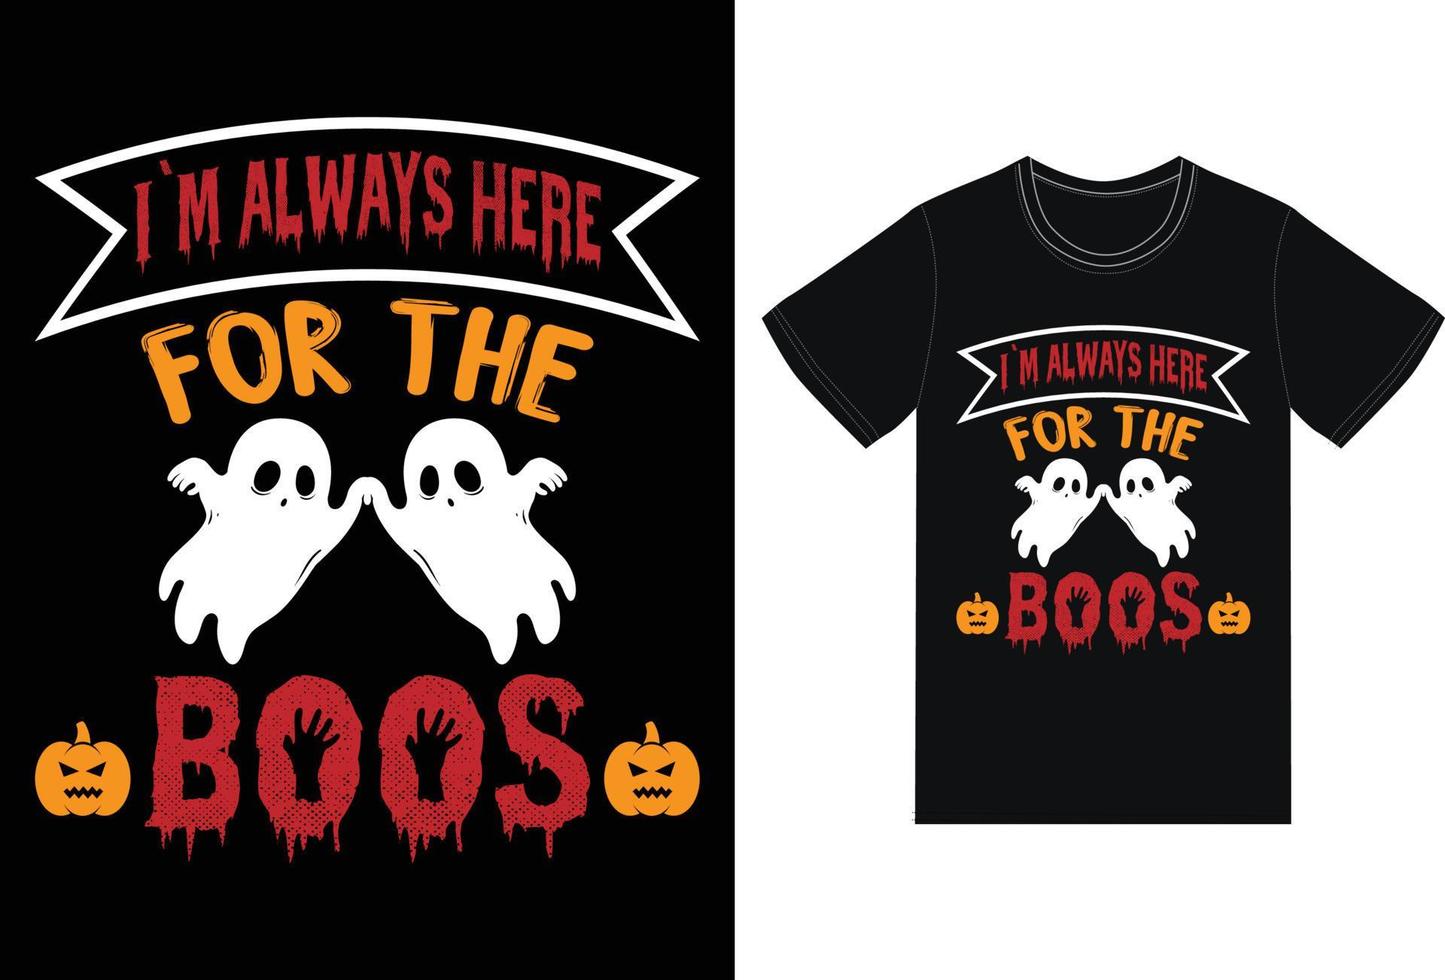 Halloween zitiert T-Shirt-Design für den Halloween-Tag vektor